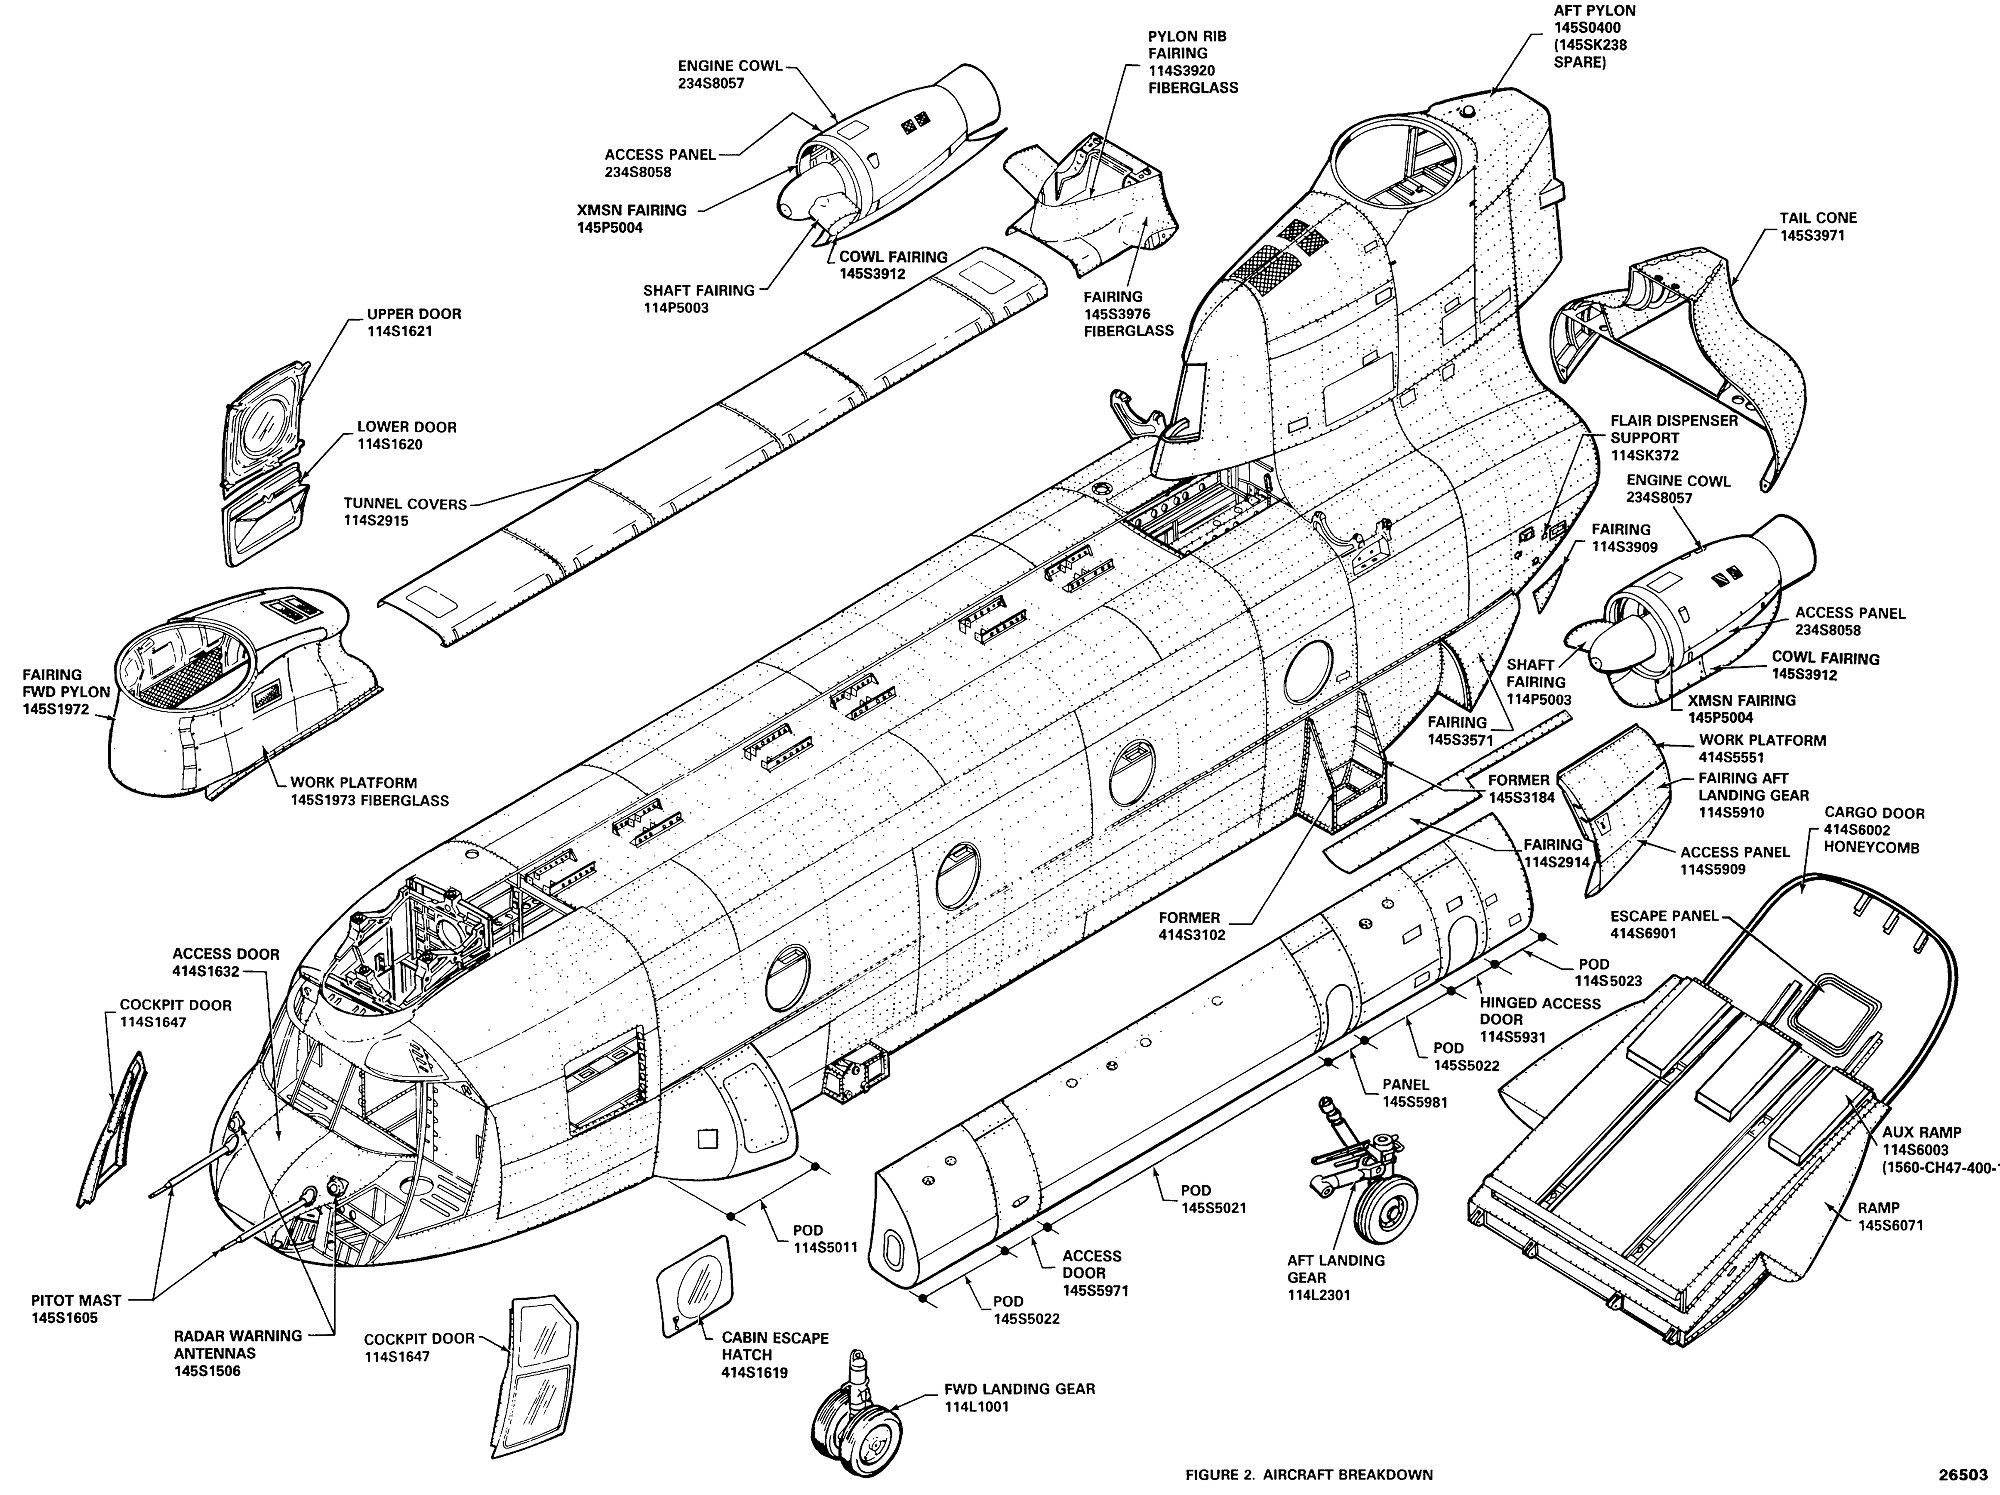 CH-47 Chinook blueprint